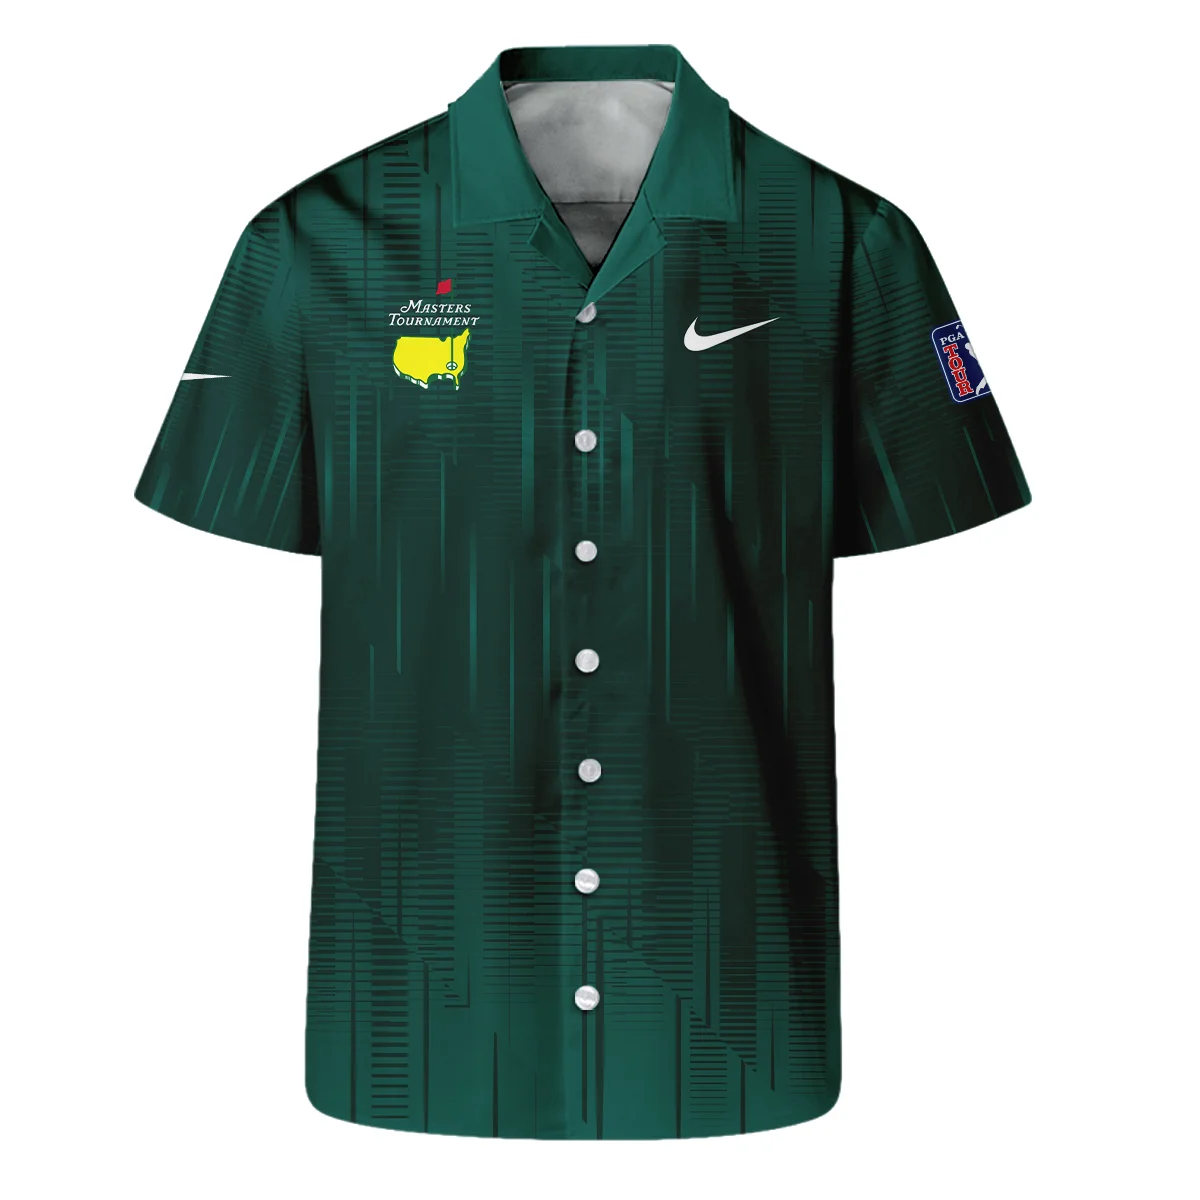 Masters Tournament Nike Dark Green Gradient Stripes Pattern Unisex T-Shirt Style Classic T-Shirt